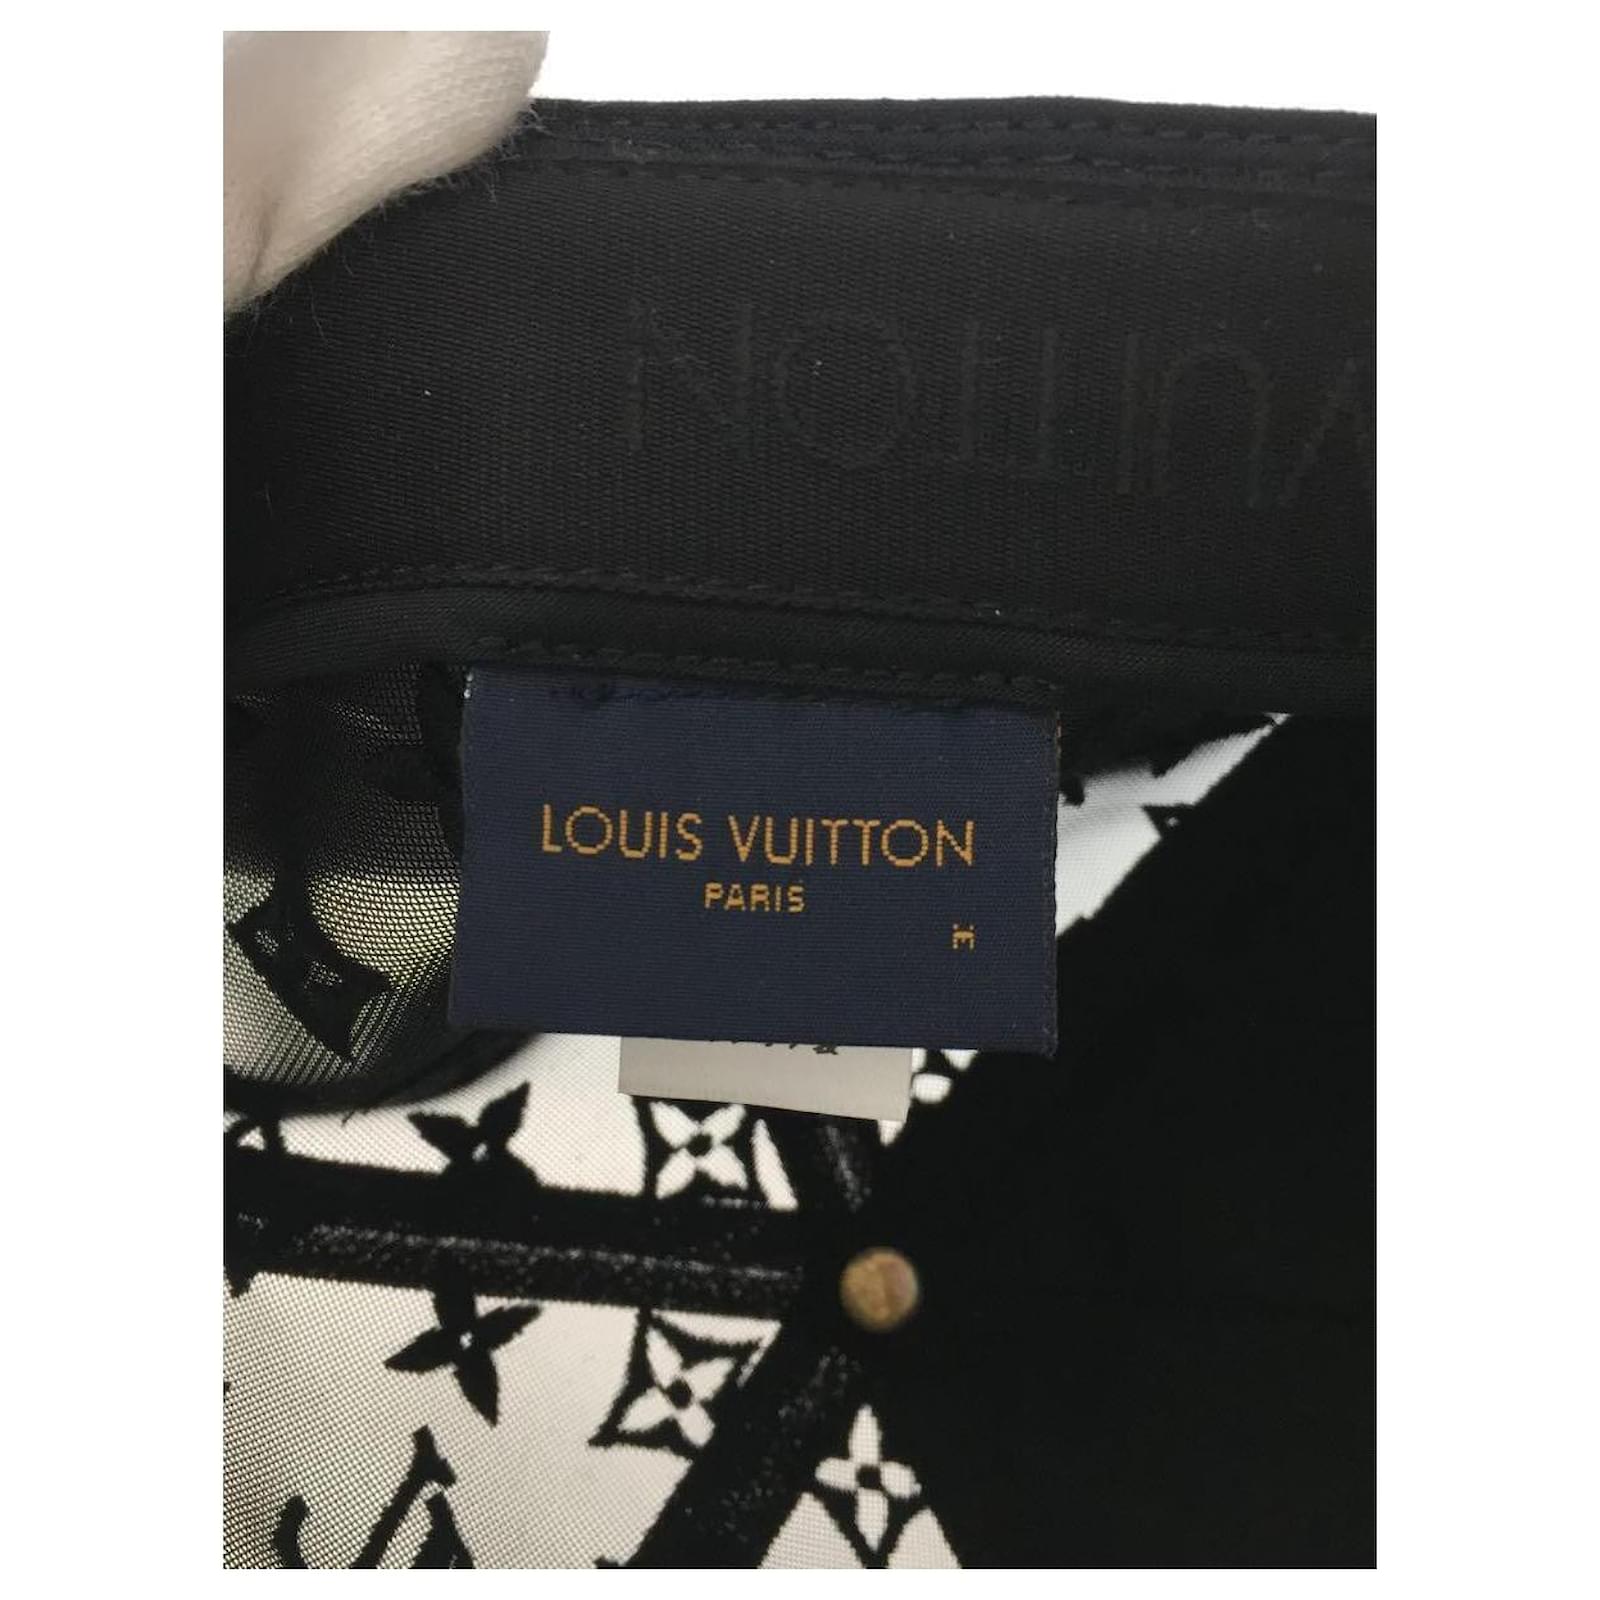 Gorra Louis Vuitton RY91 Gorra Louis Vuitton De Beisbol Logo y